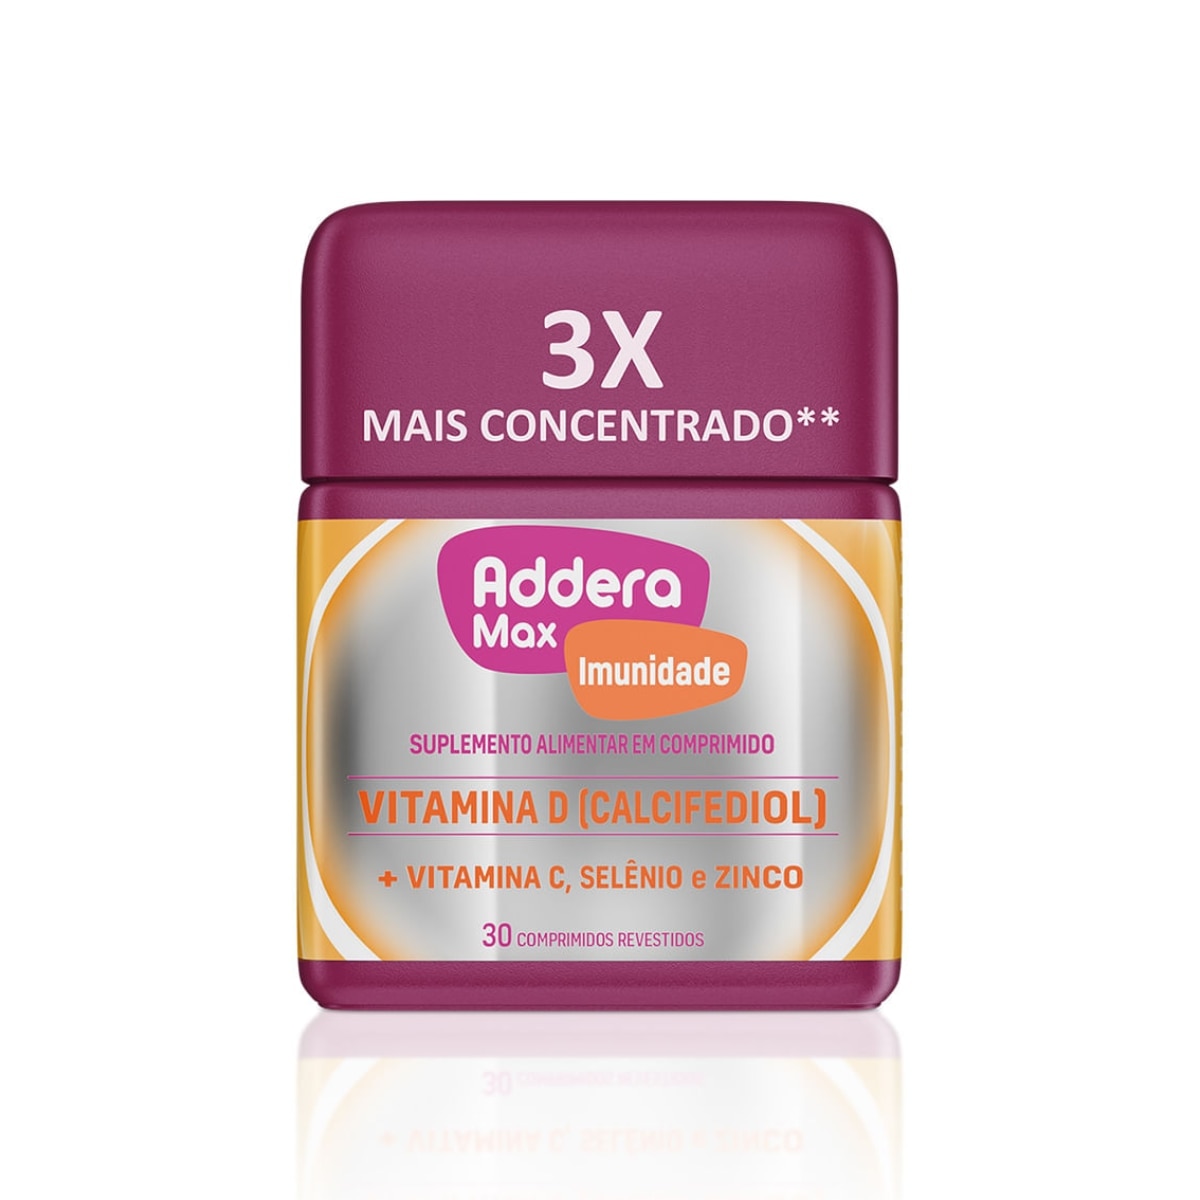 Addera Max +Imunidade 30 Comprimidos Revestidos